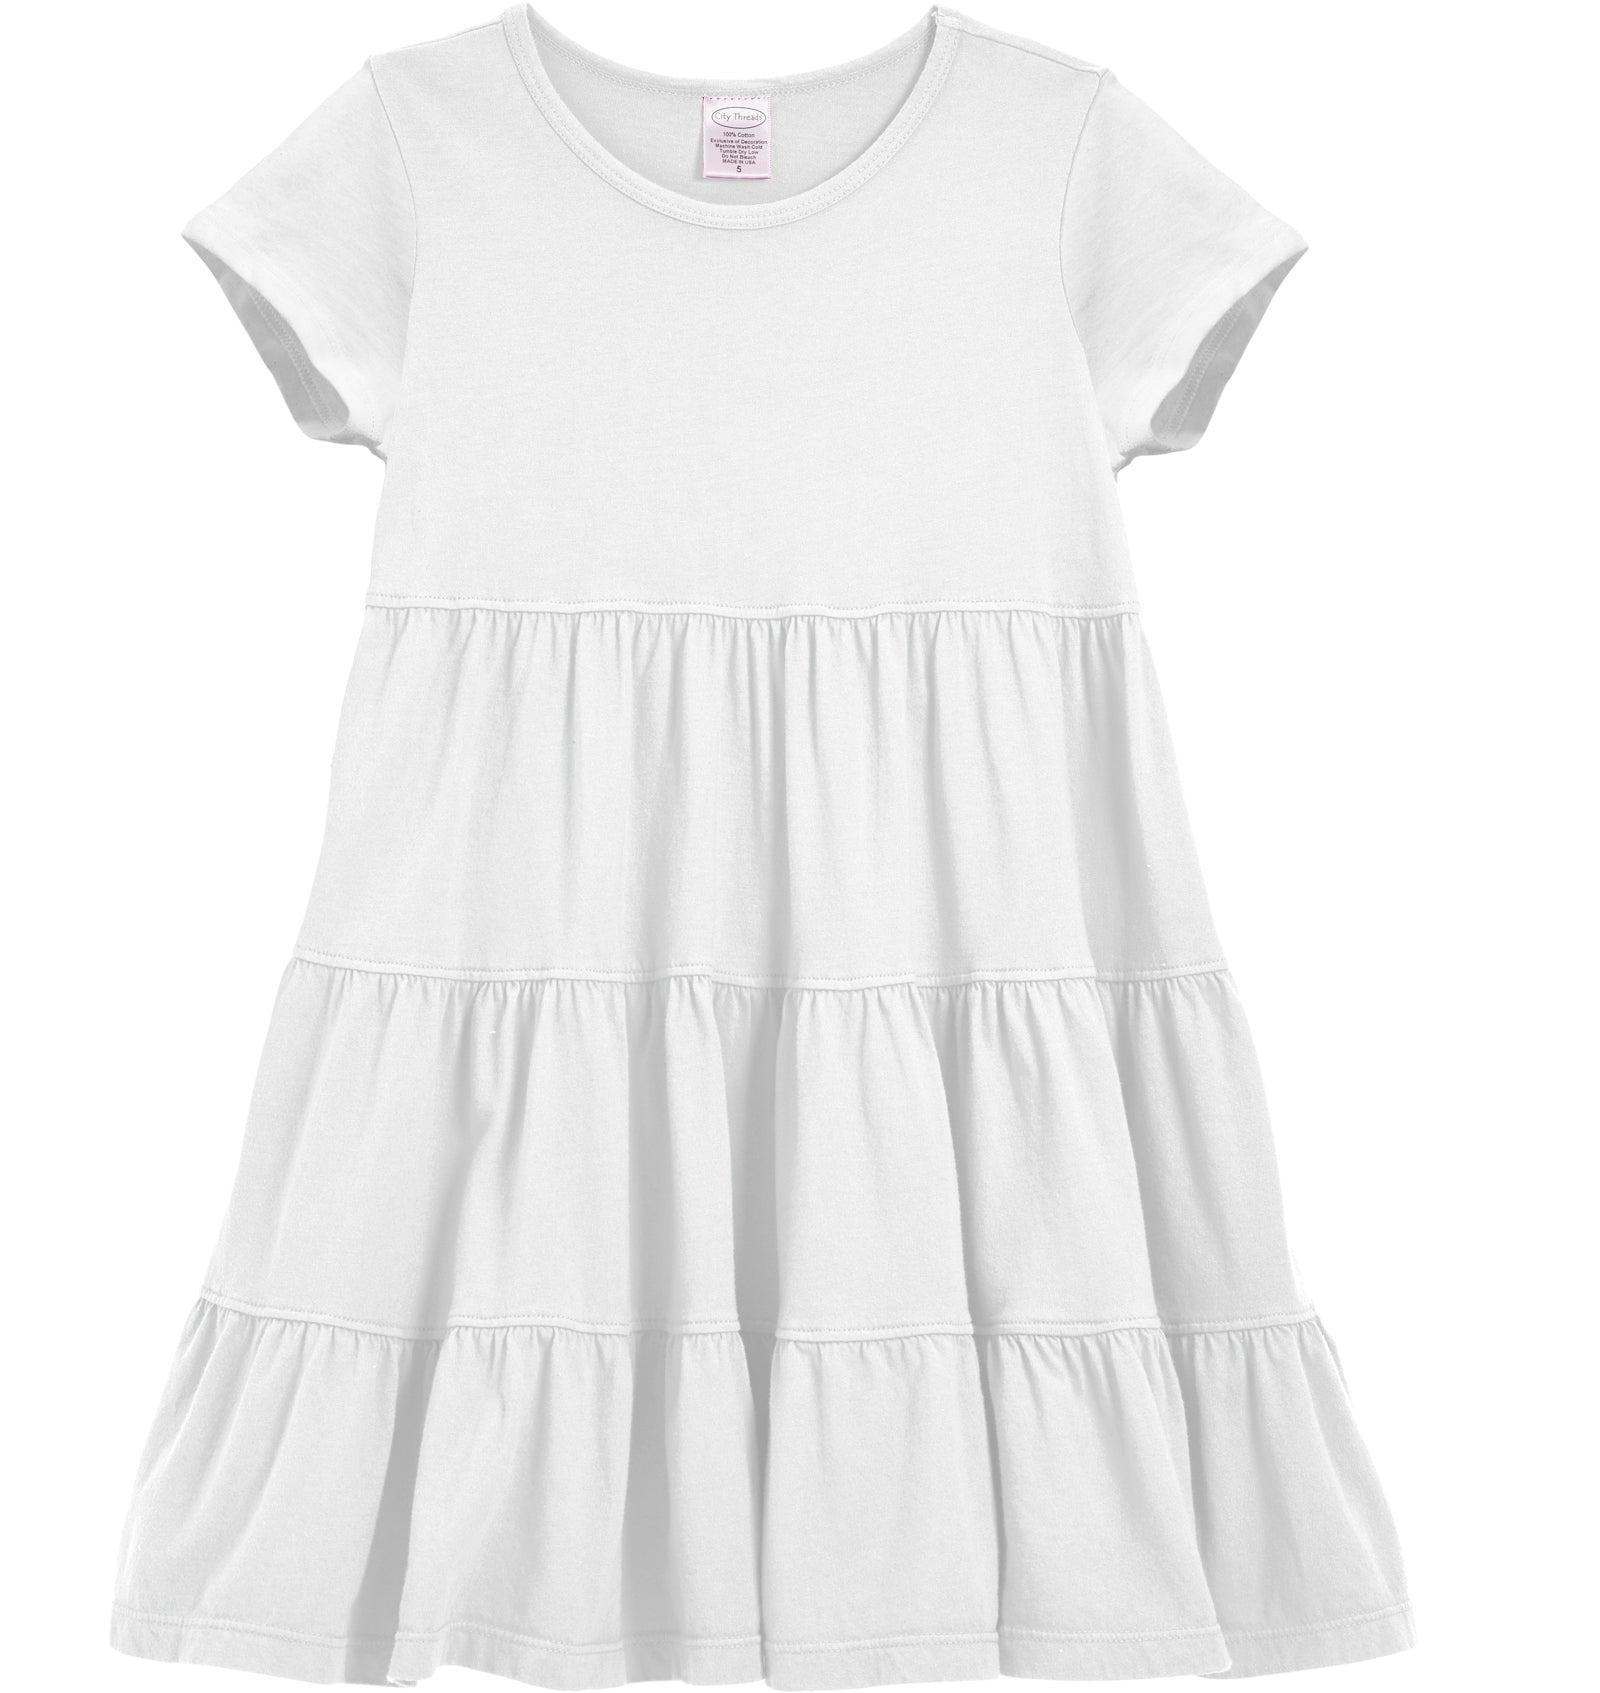  Toddler Girl Dress Summer Short Sleeve Cotton Casual White  Zebra Party Elastic Waist Twinly Skirt Swing Dresses 3T